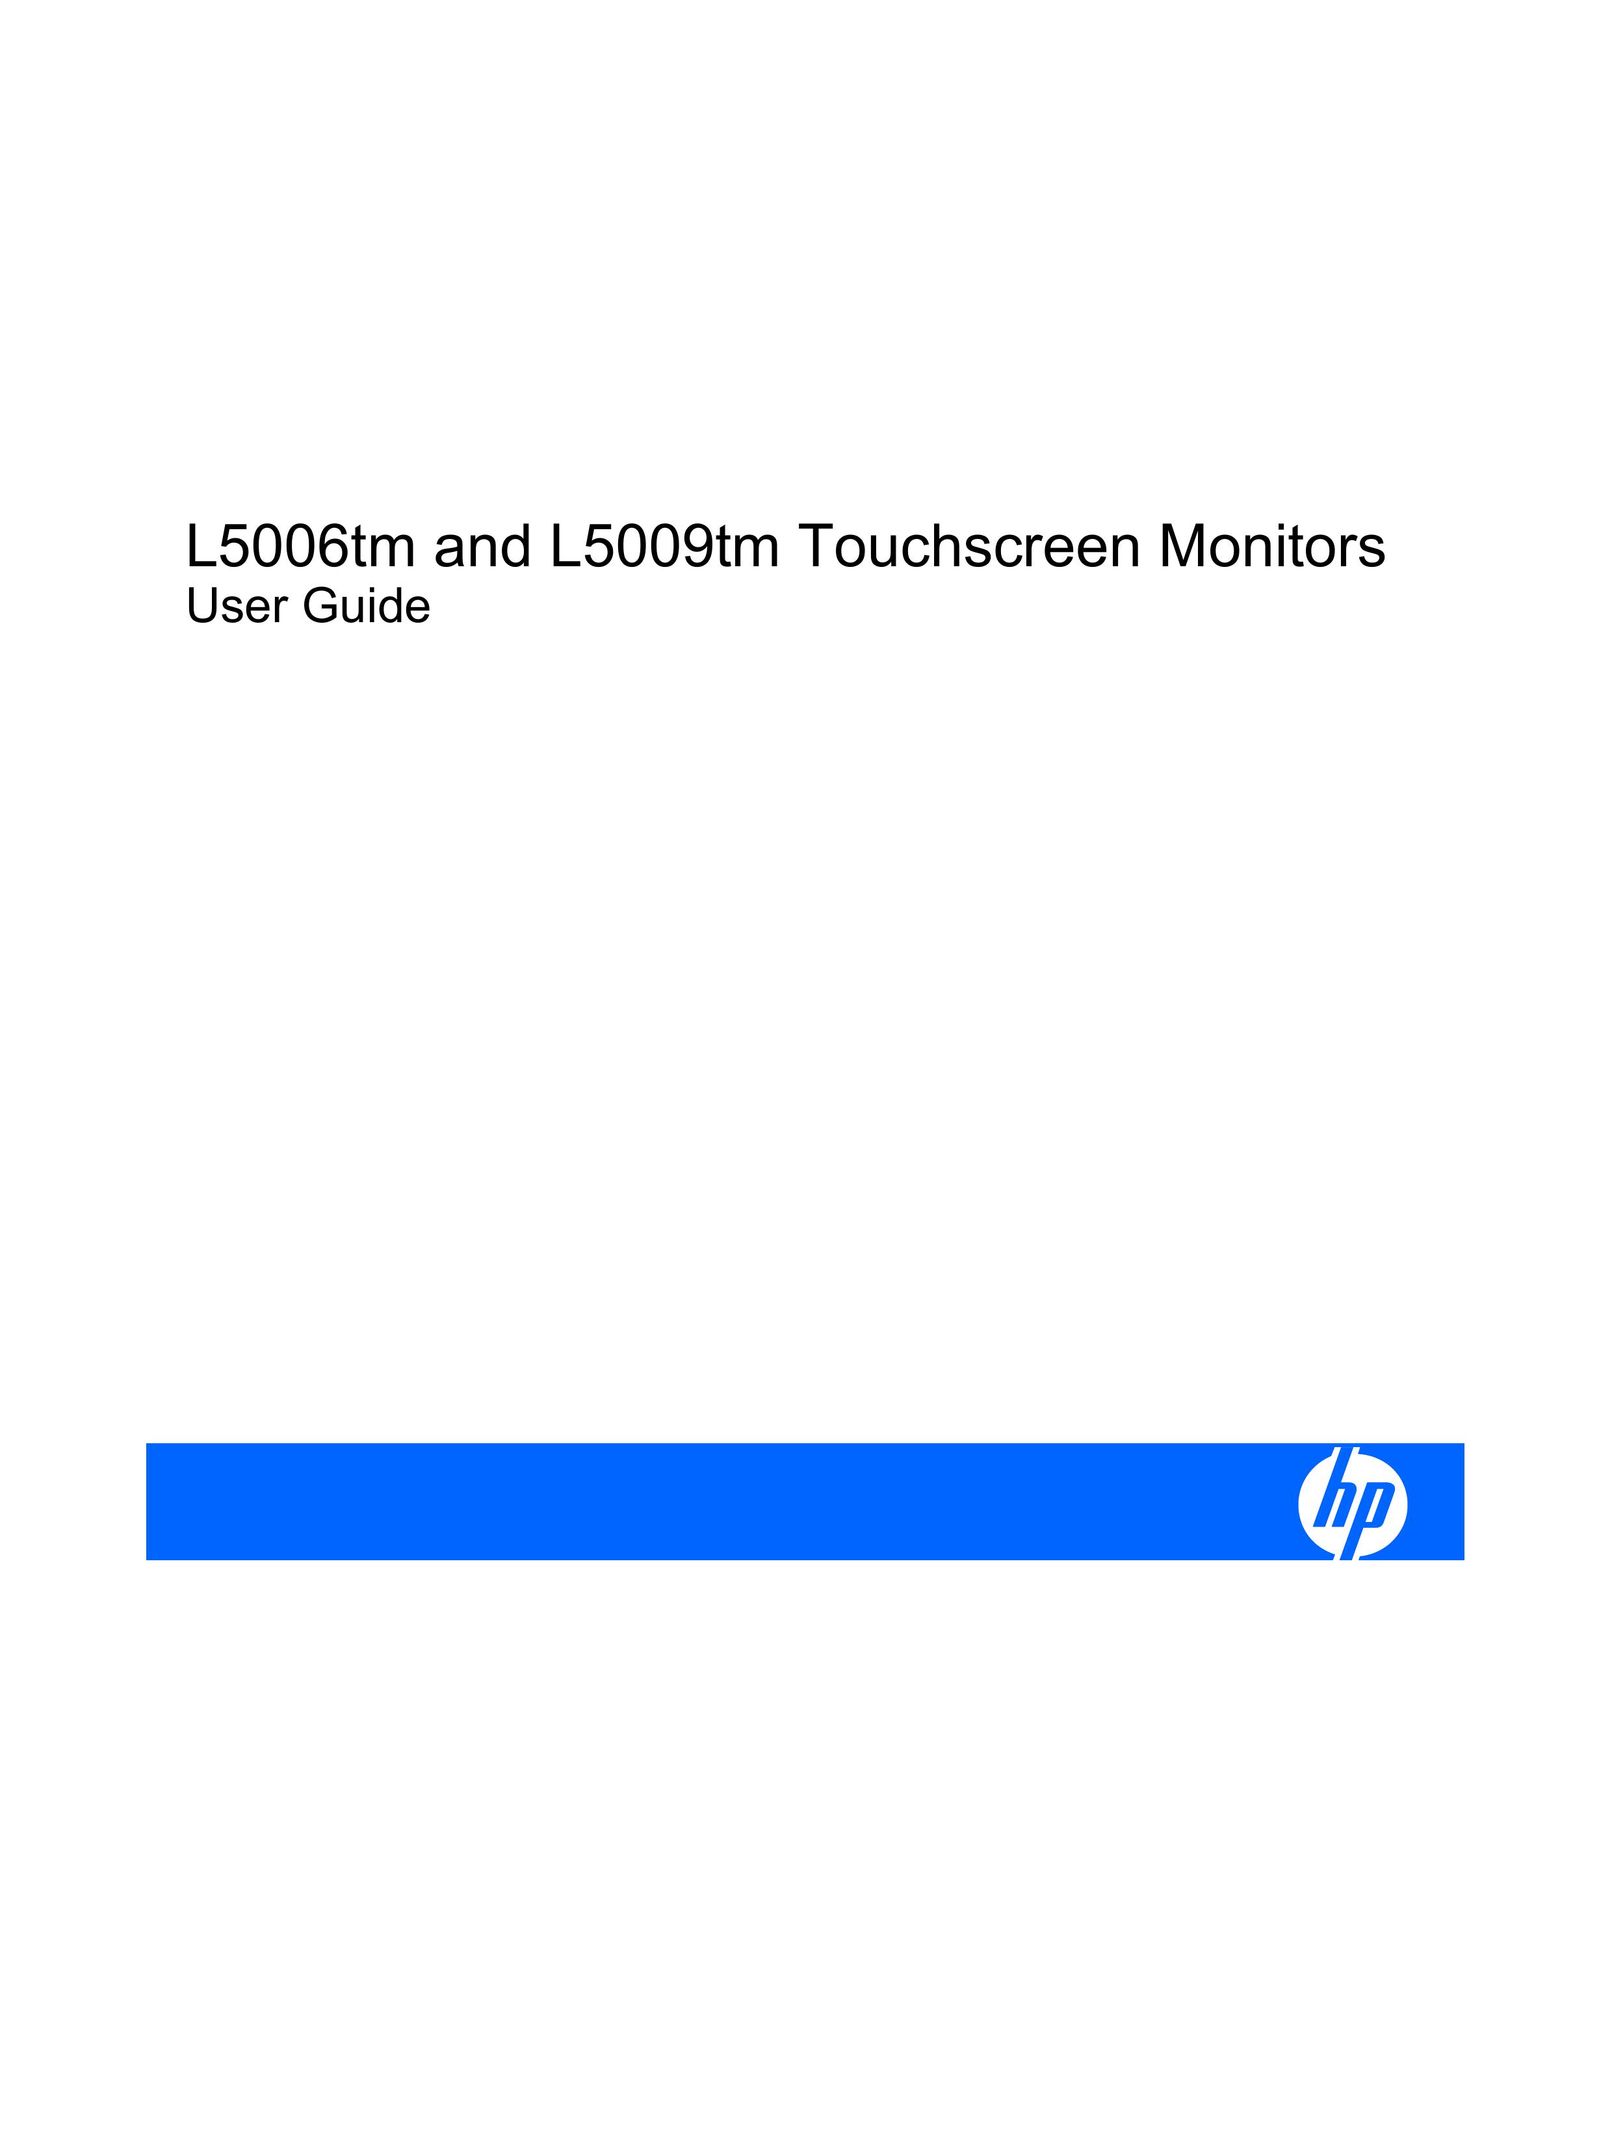 HP (Hewlett-Packard) L5006TM Car Video System User Manual